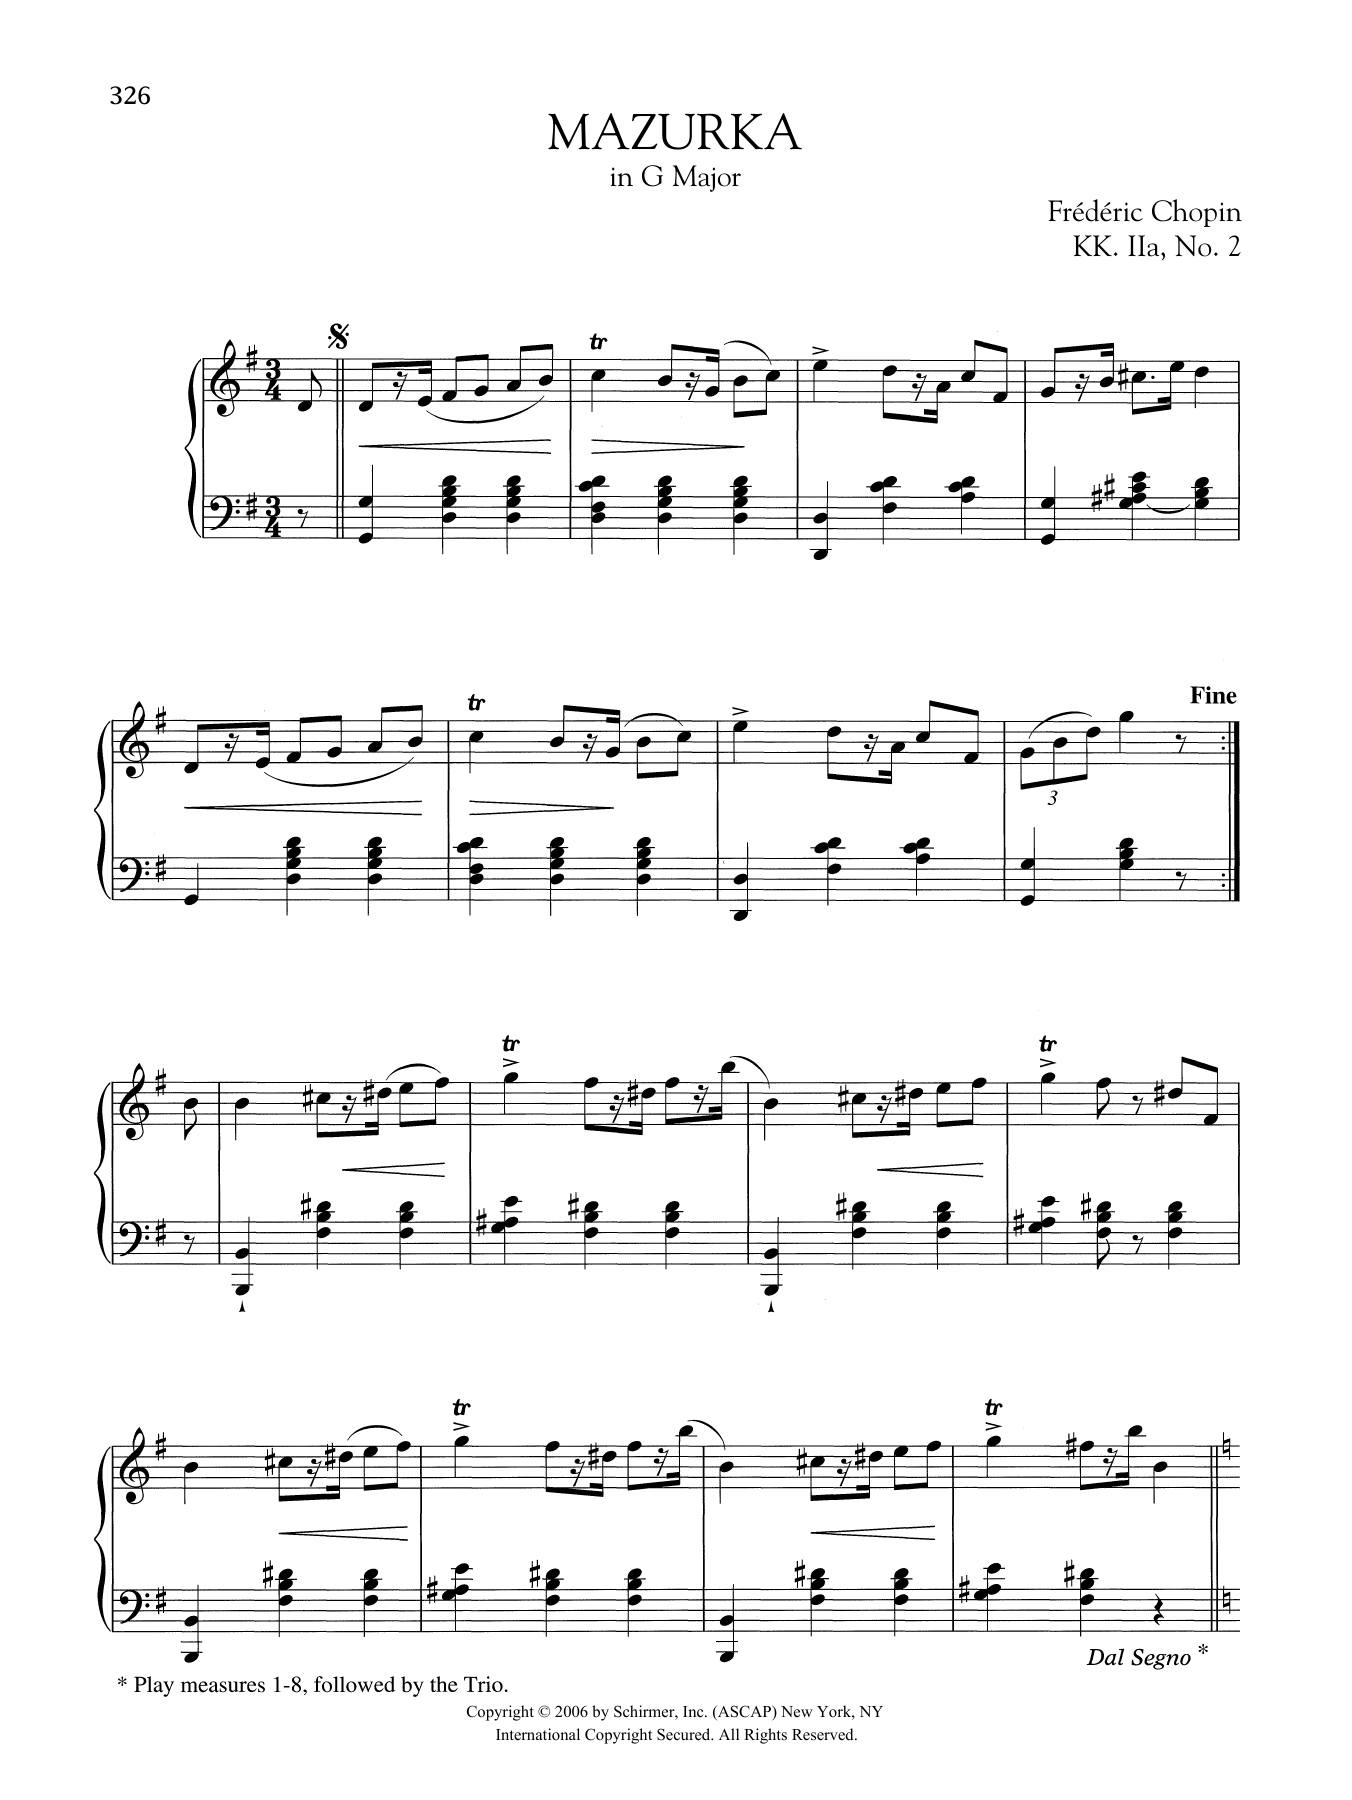 Mazurka in G Major, KK. IIa, No. 2 sheet music